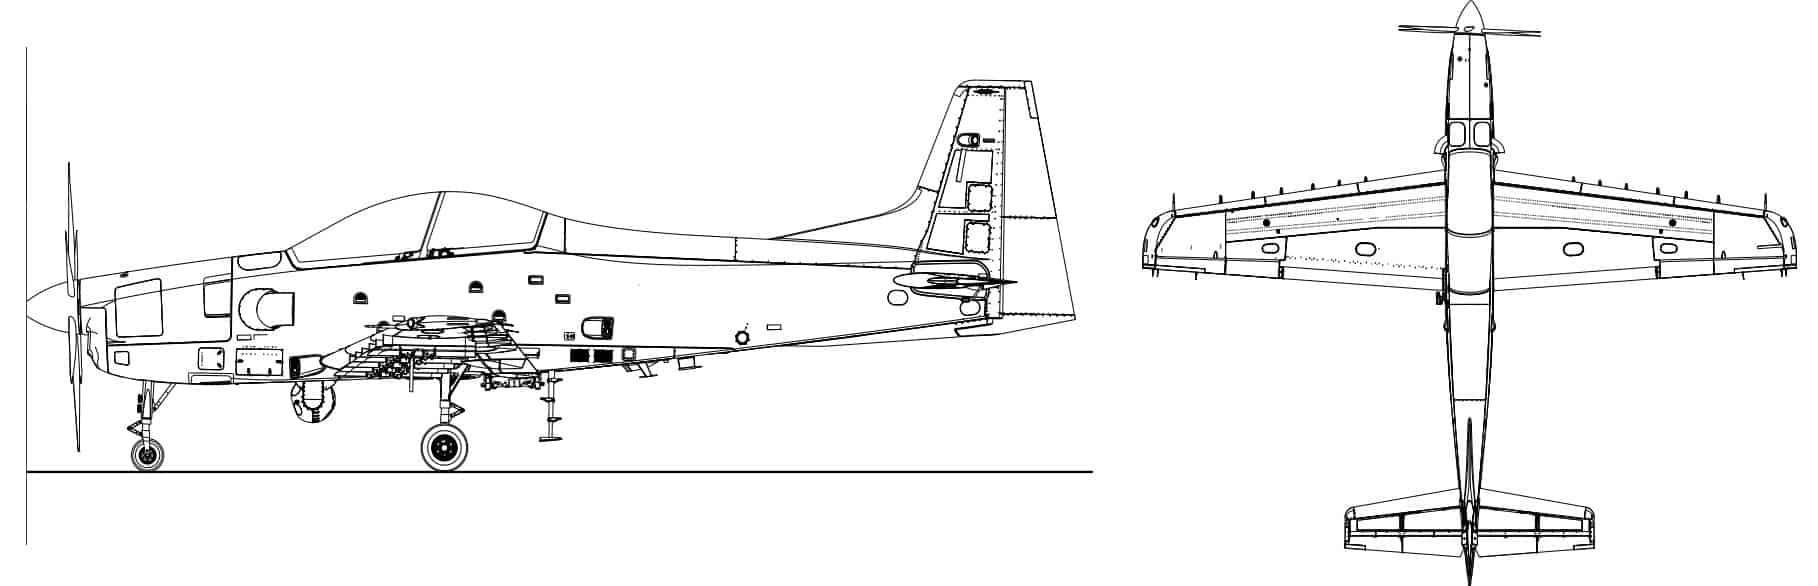 Навчально-бойовий літак Calidus B-350 еміратської групи Calidus LLC в ОАЕ. Листопад 2021